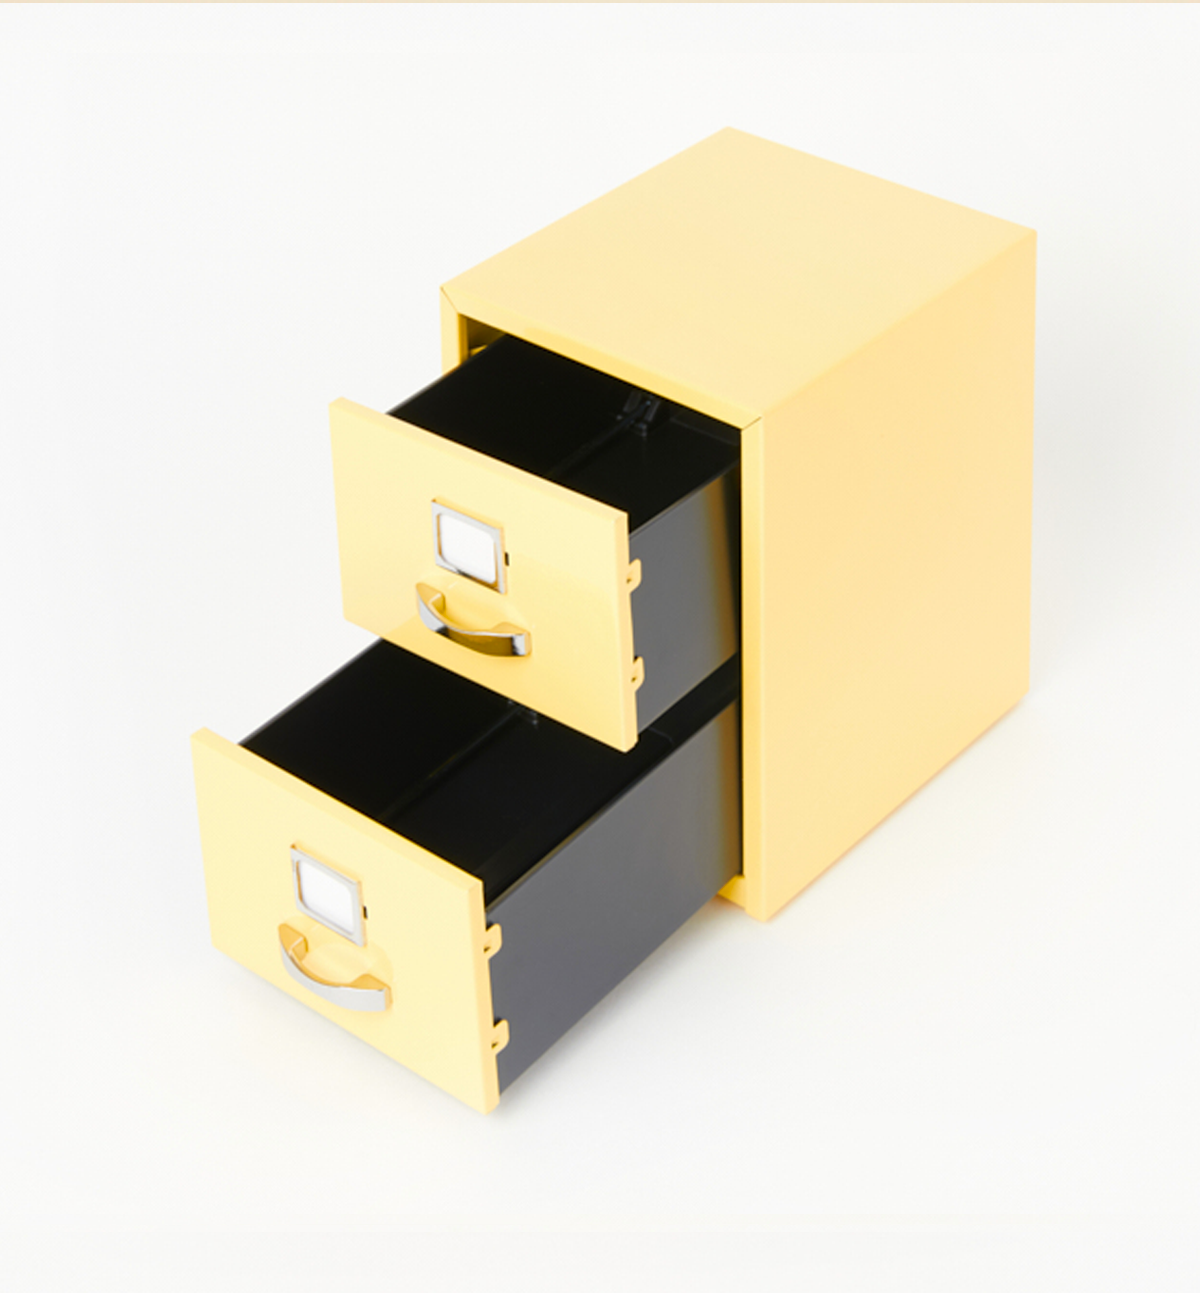 Mini Cabinet Drawer [Yellow]